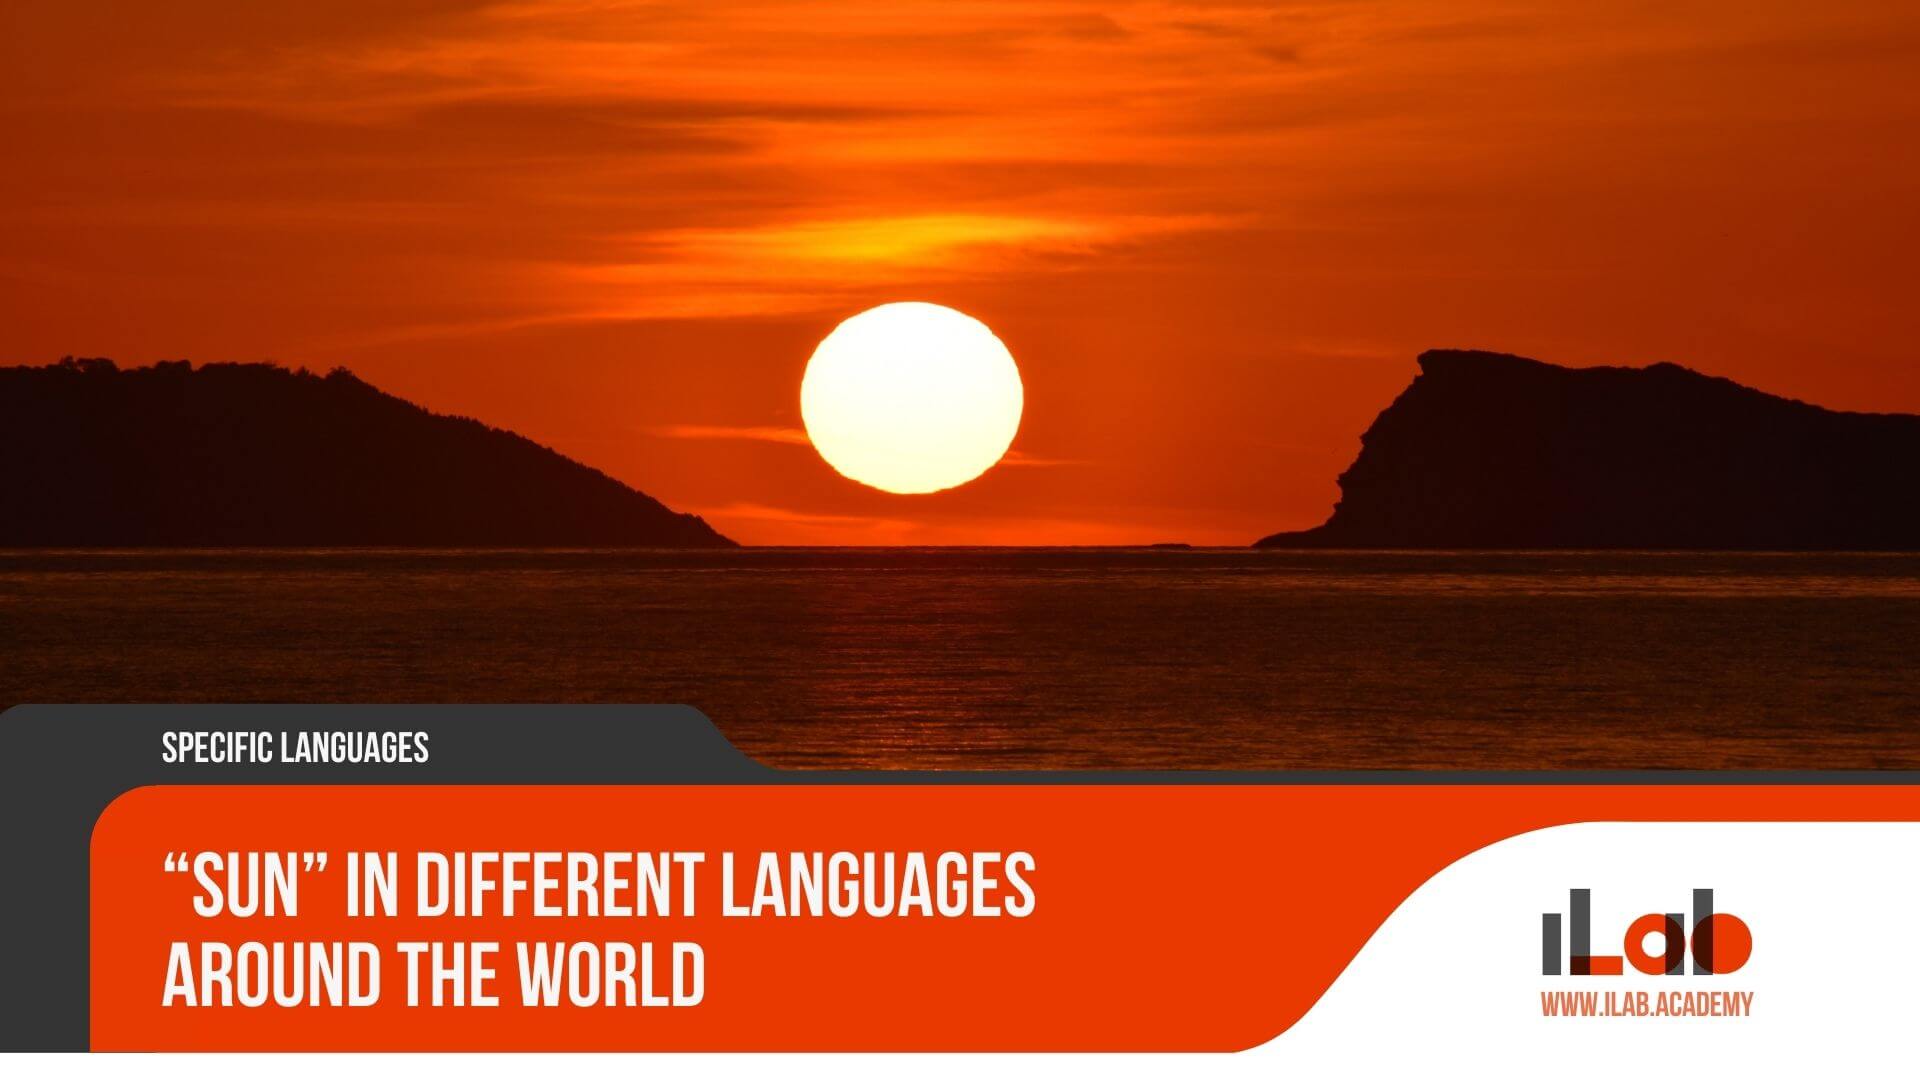 “Sun” in Different Languages Around the World